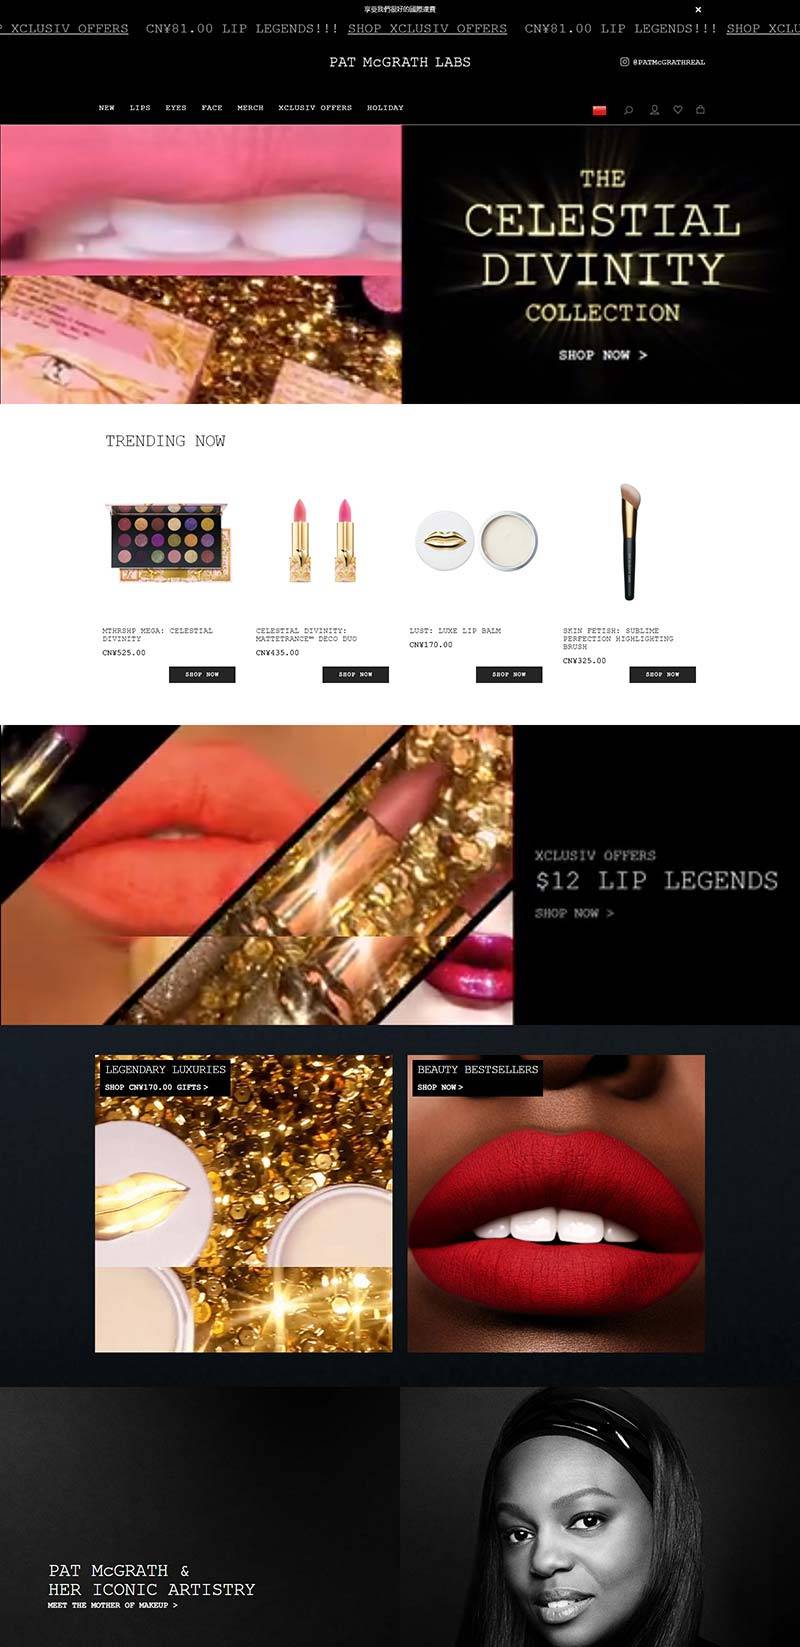 Pat McGrath Labs 美国品牌彩妆购物网站